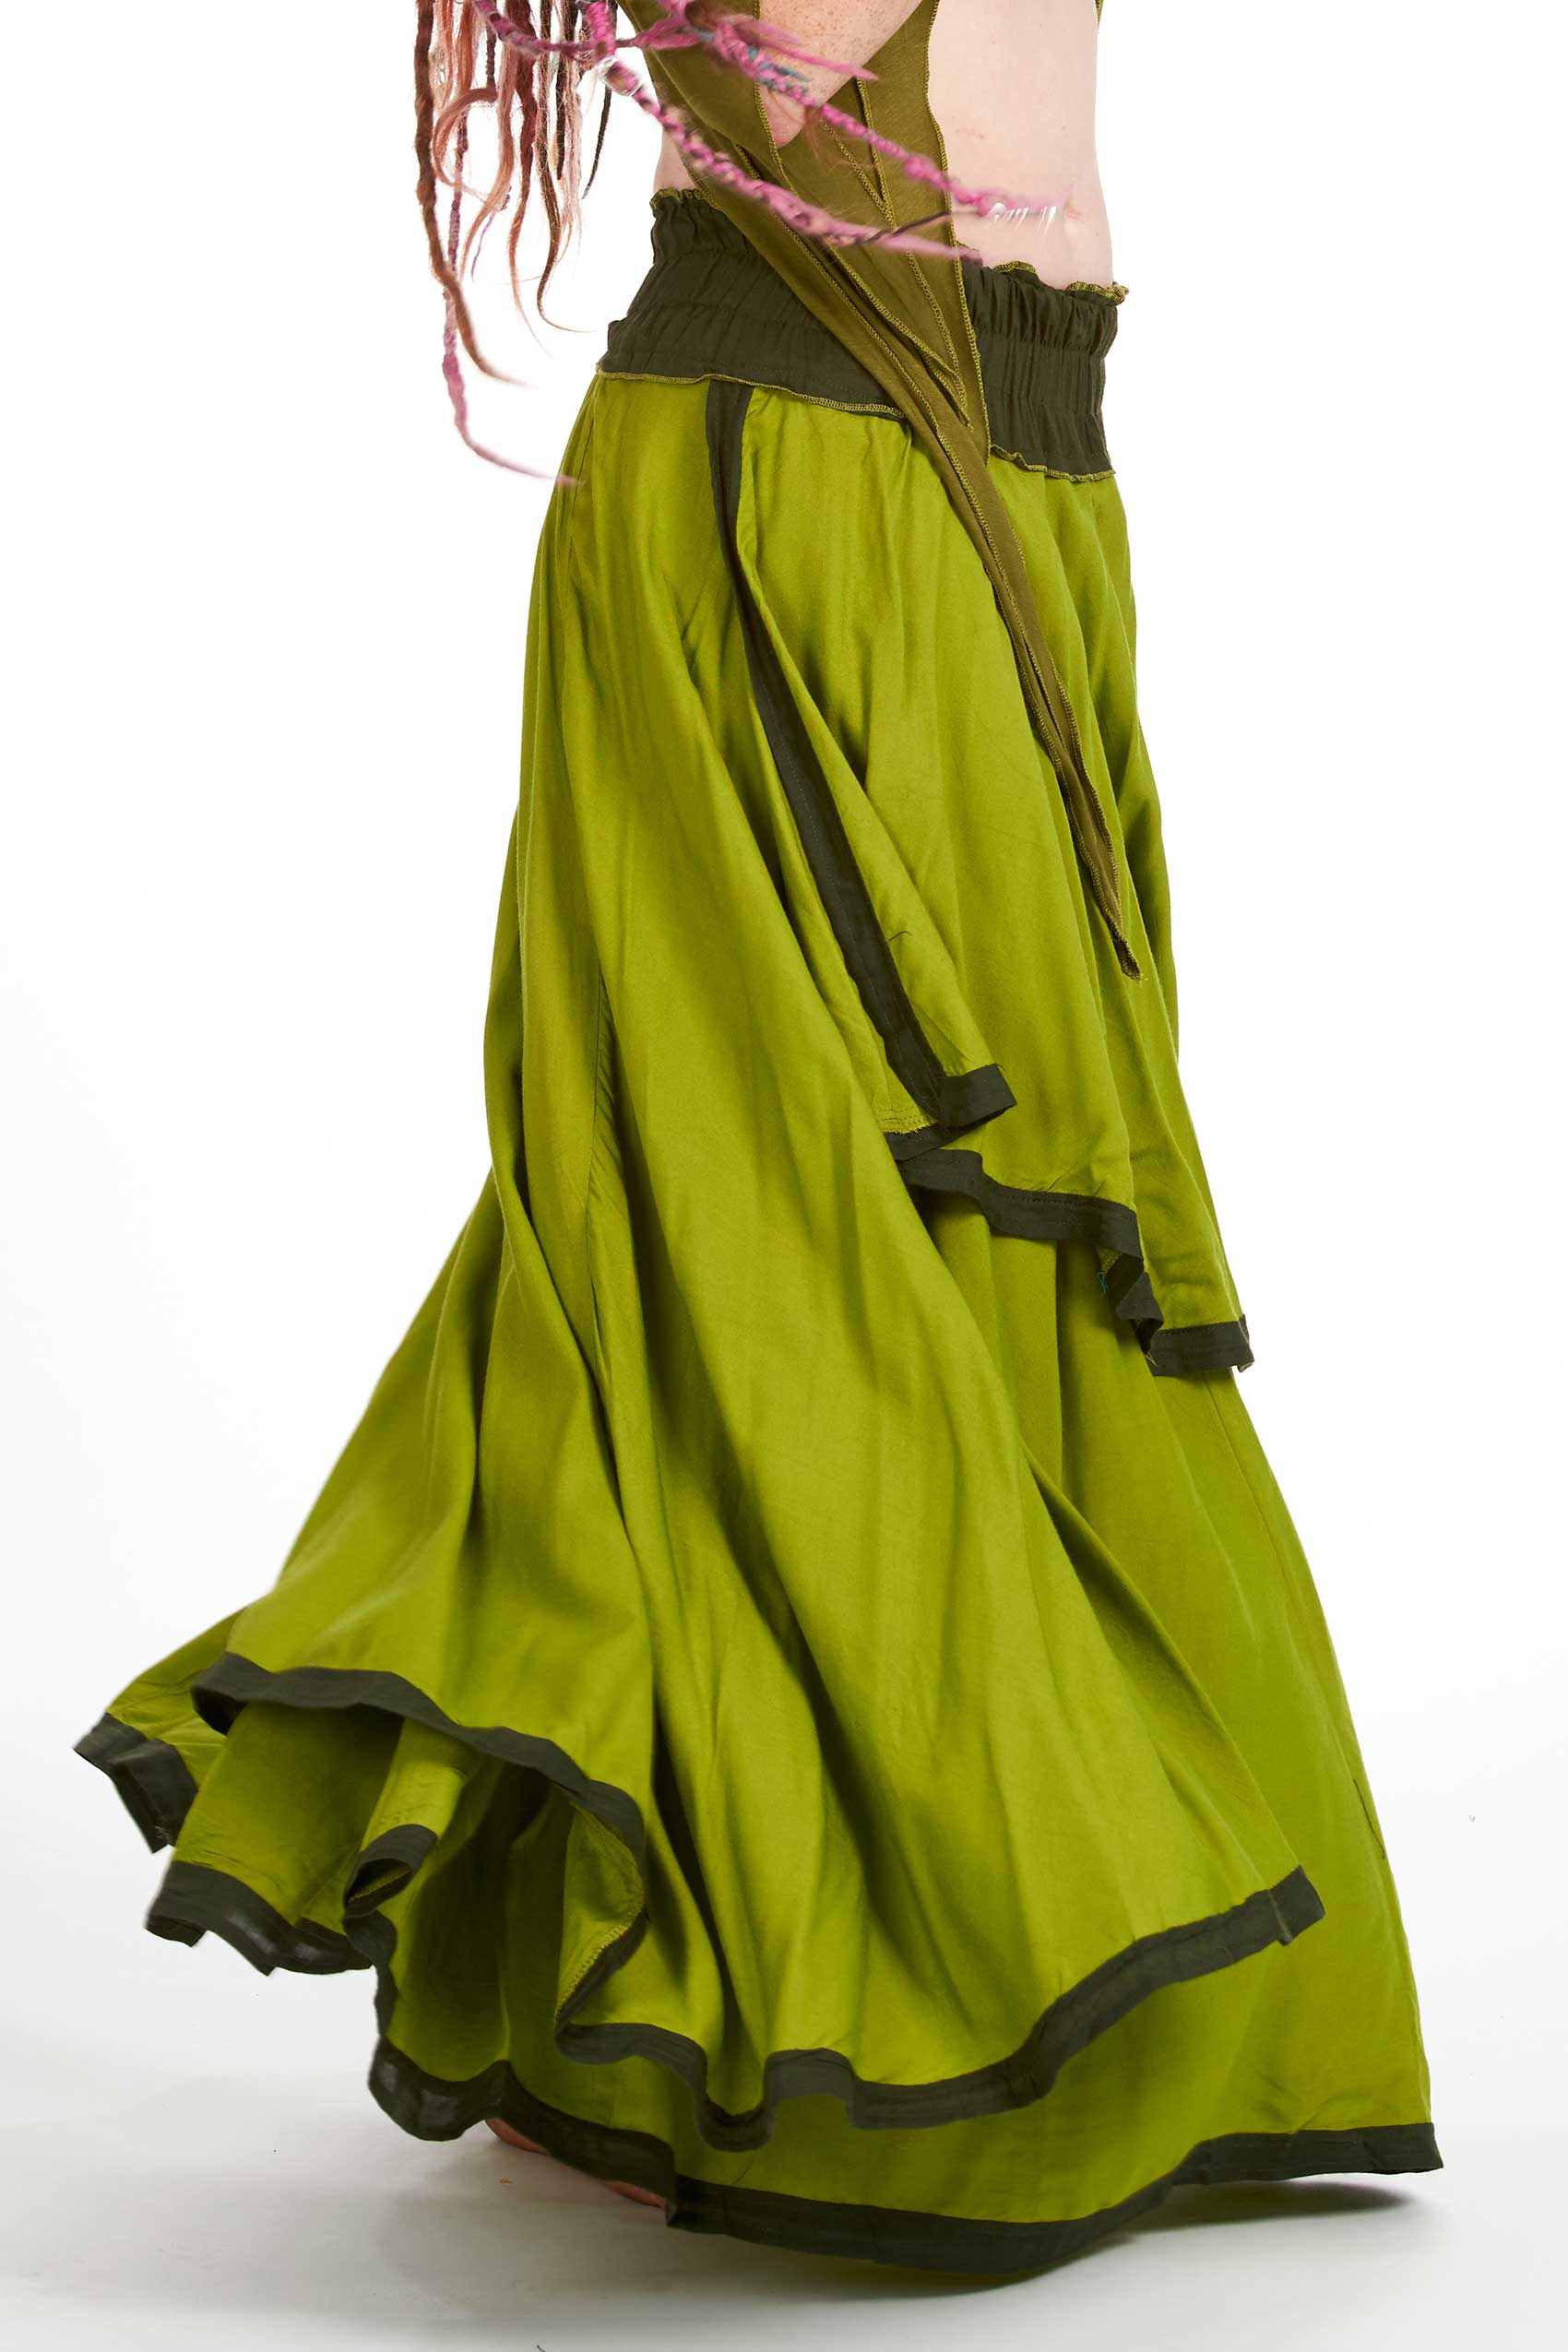 Hippy Flow Skirt, long boho skirt, bohemian gypsy skirt | Altshop UK